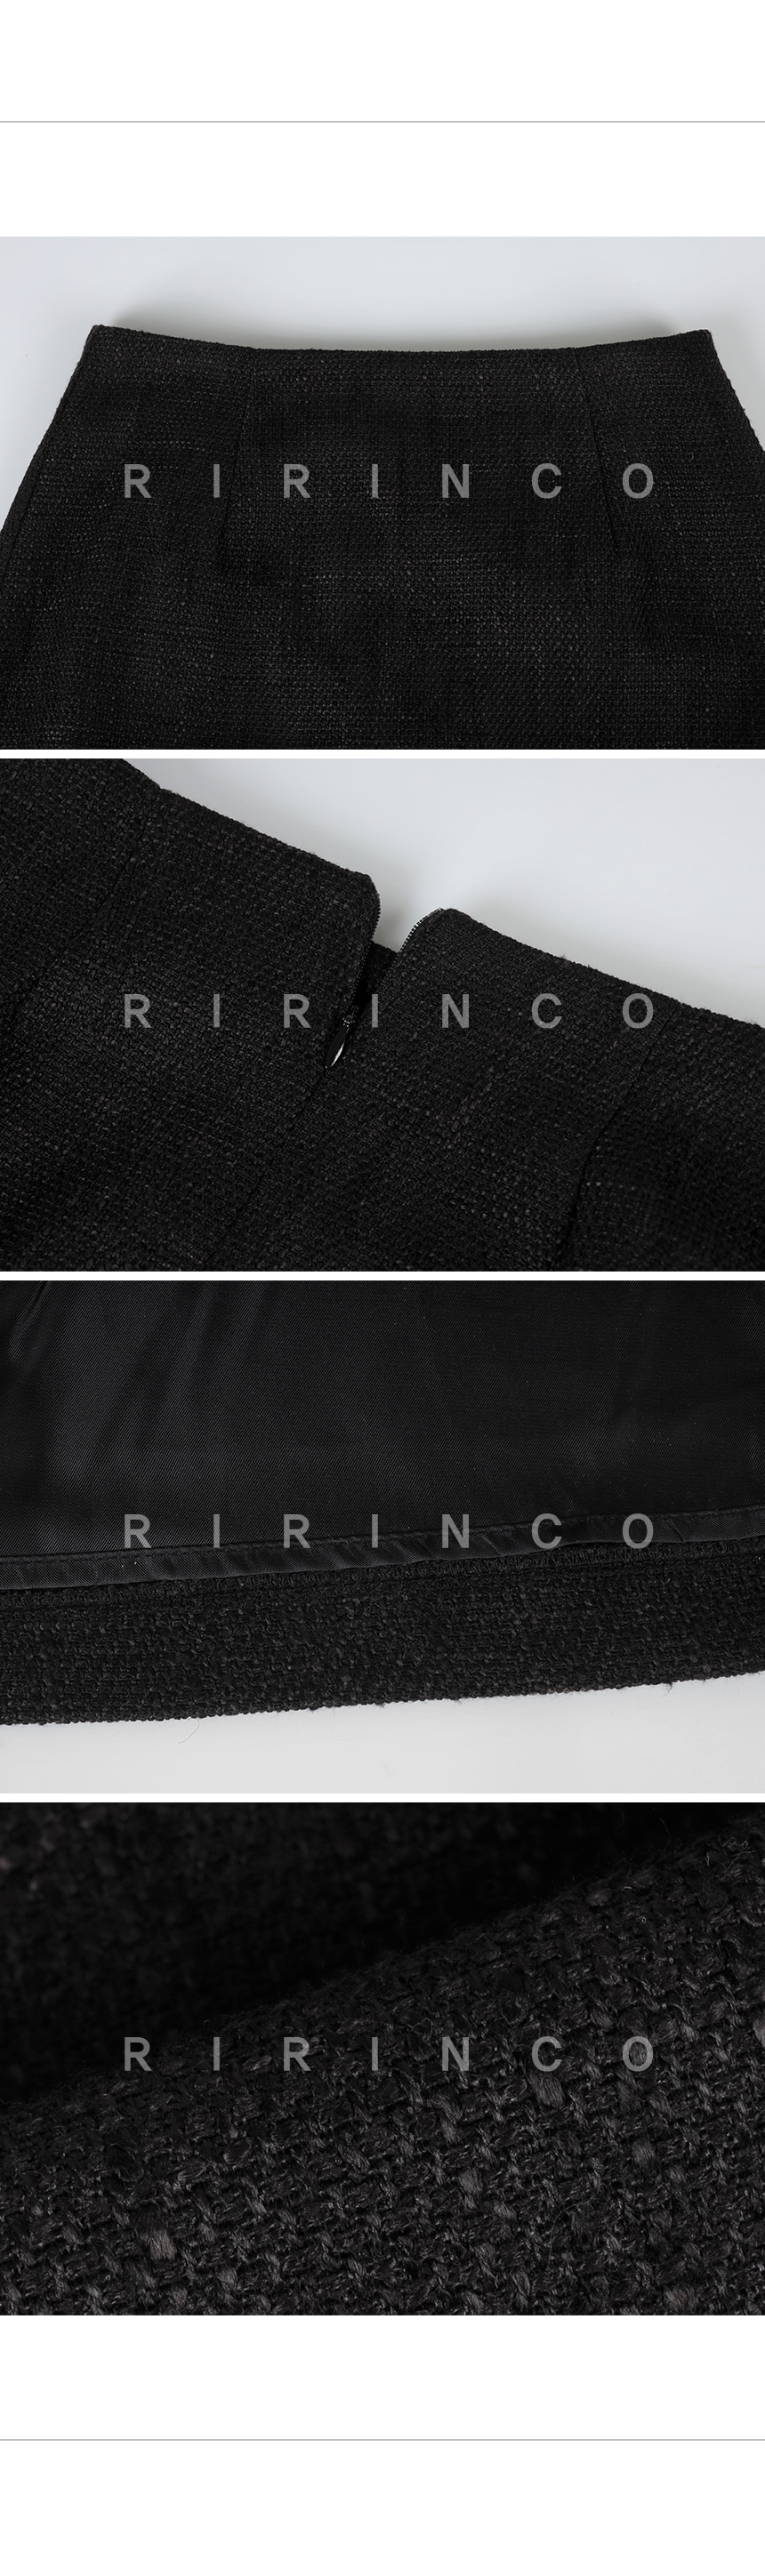 RIRINCO ツーピースツイードミニスカート